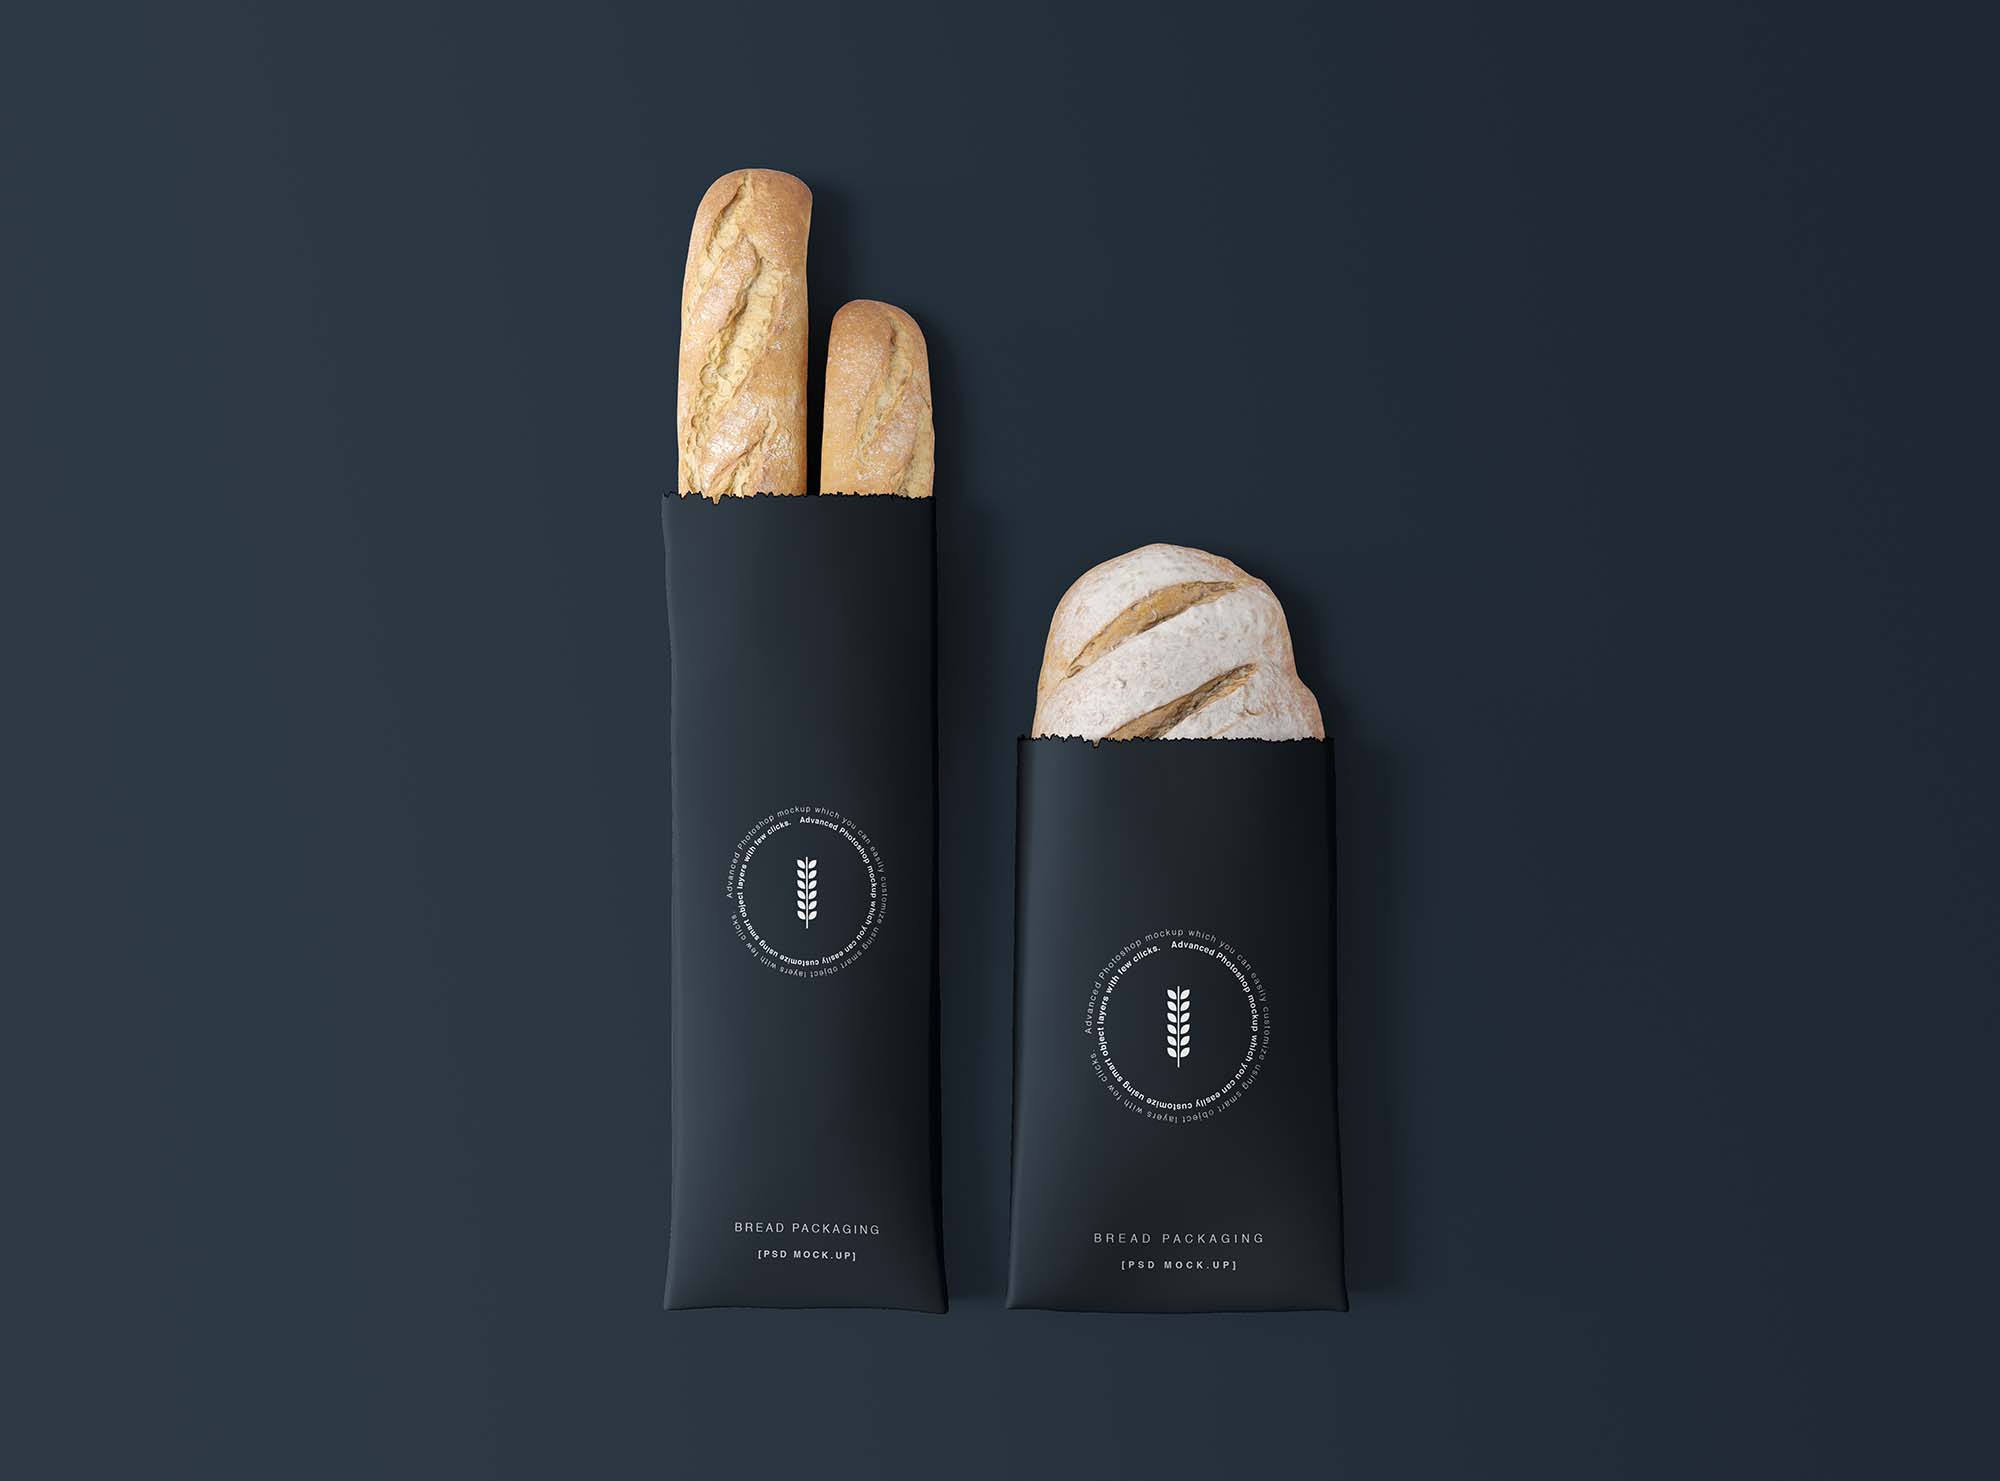 Mockup packaging. Мокап упаковки хлеба. Пакет для хлеба мокап. Упаковка хлеба для Mock up. Мокап упаковка для выпечки.